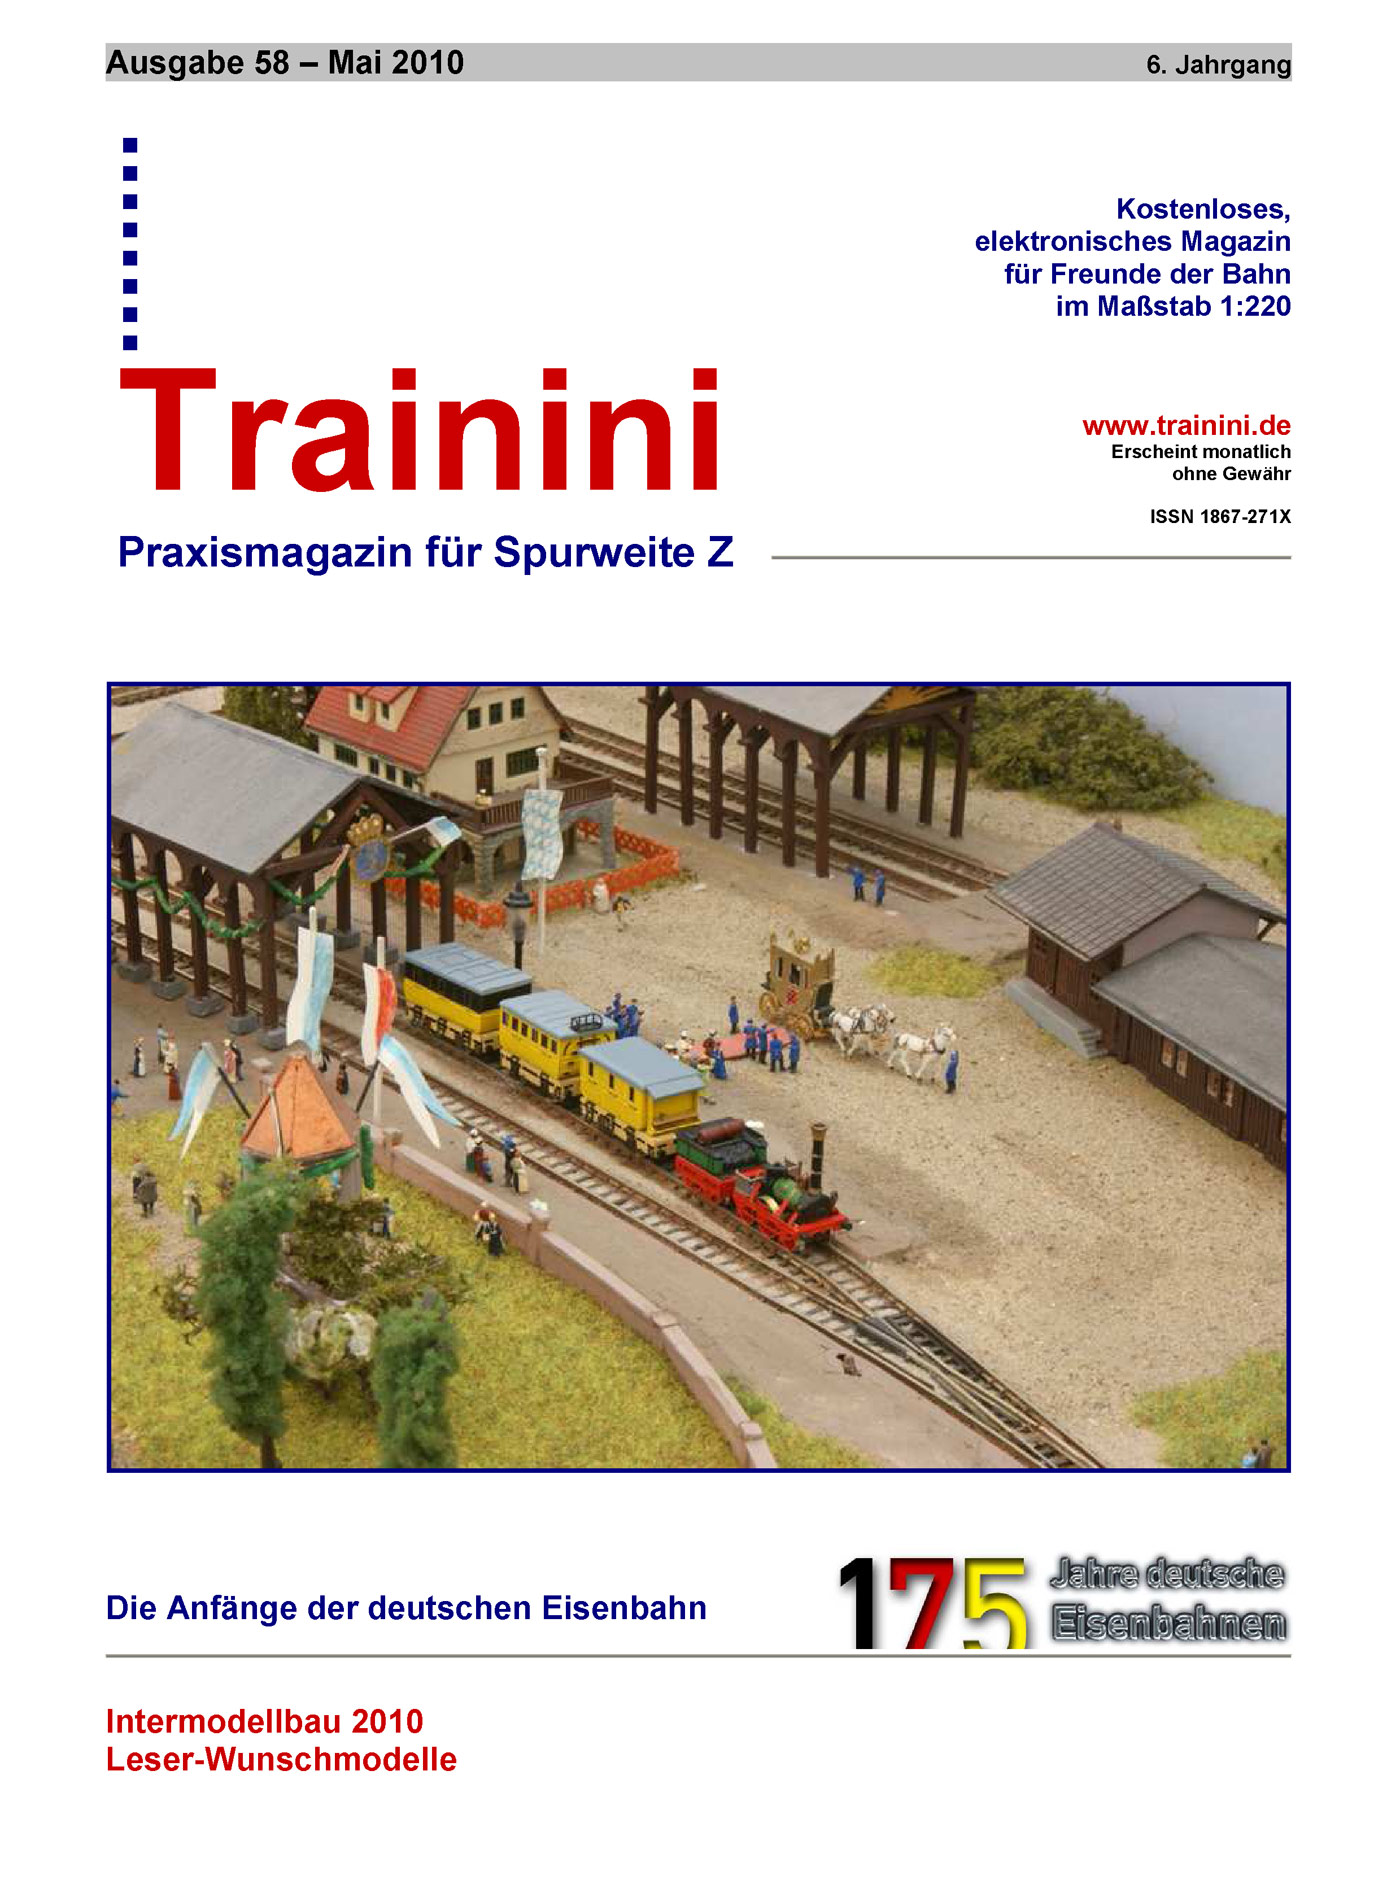 Trainini Ausgabe Mai 2010